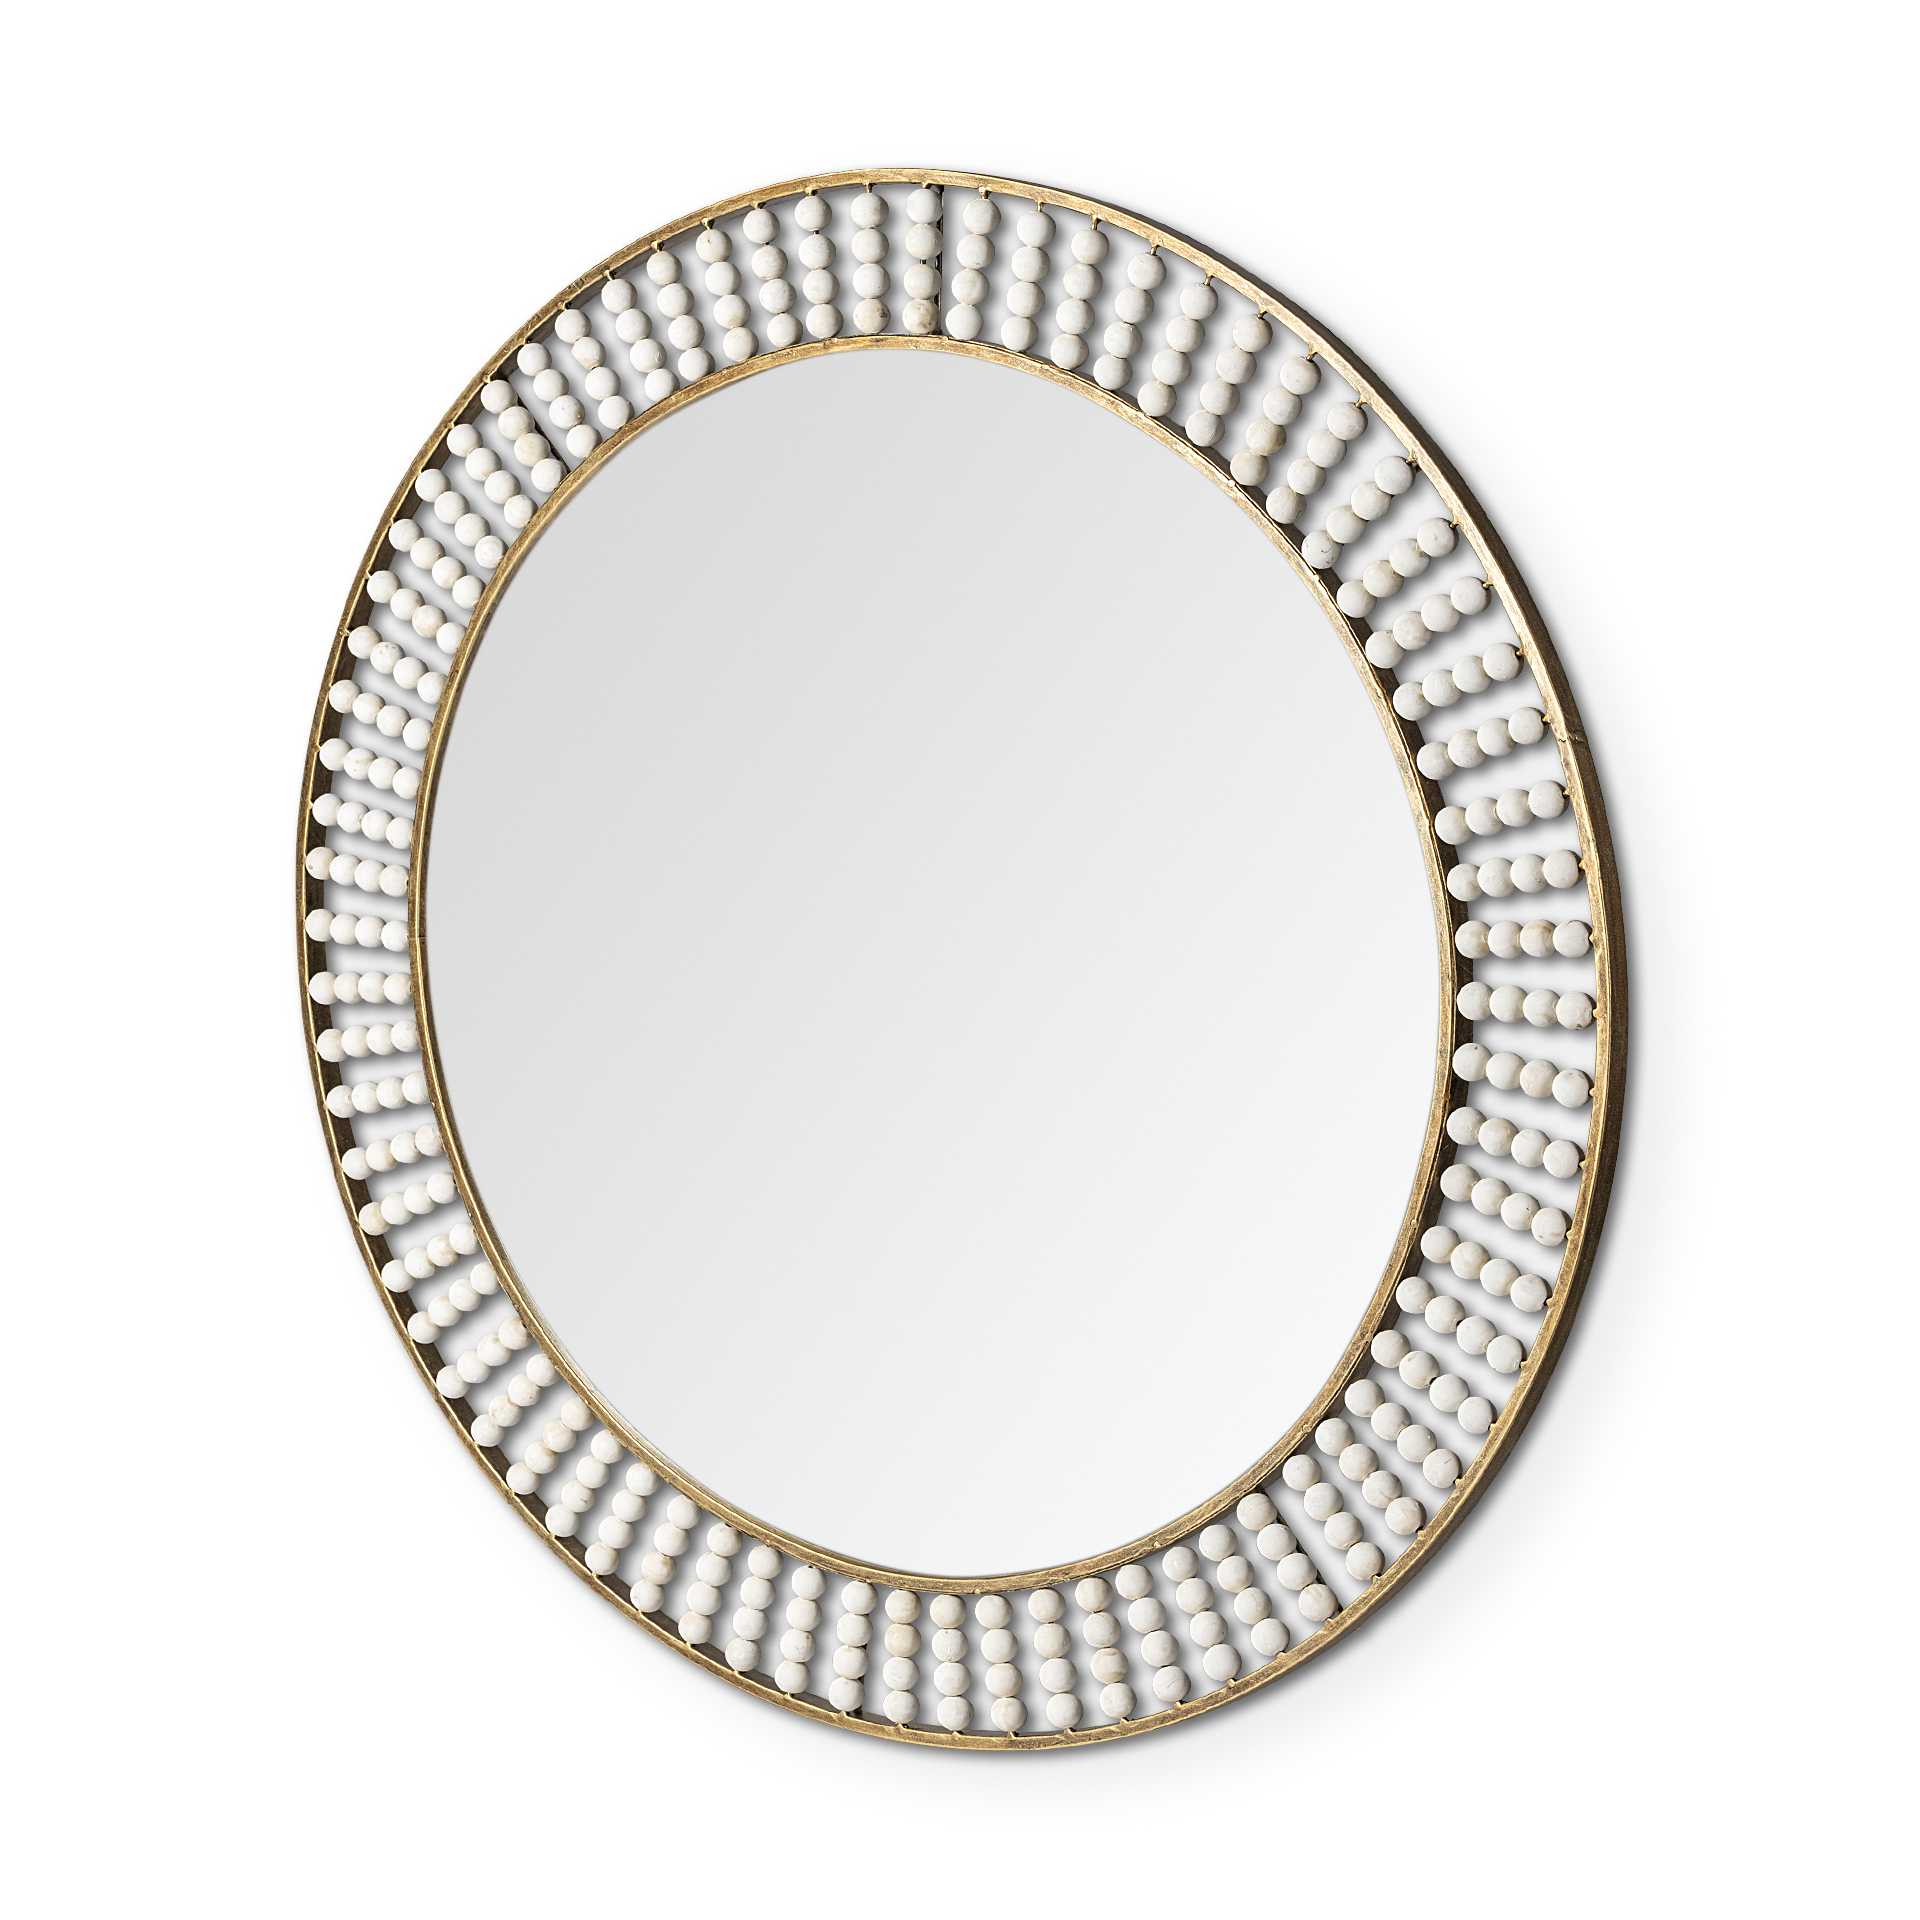 42" Round Gold Metal Frame Wall Mirror w/White Wood Beads